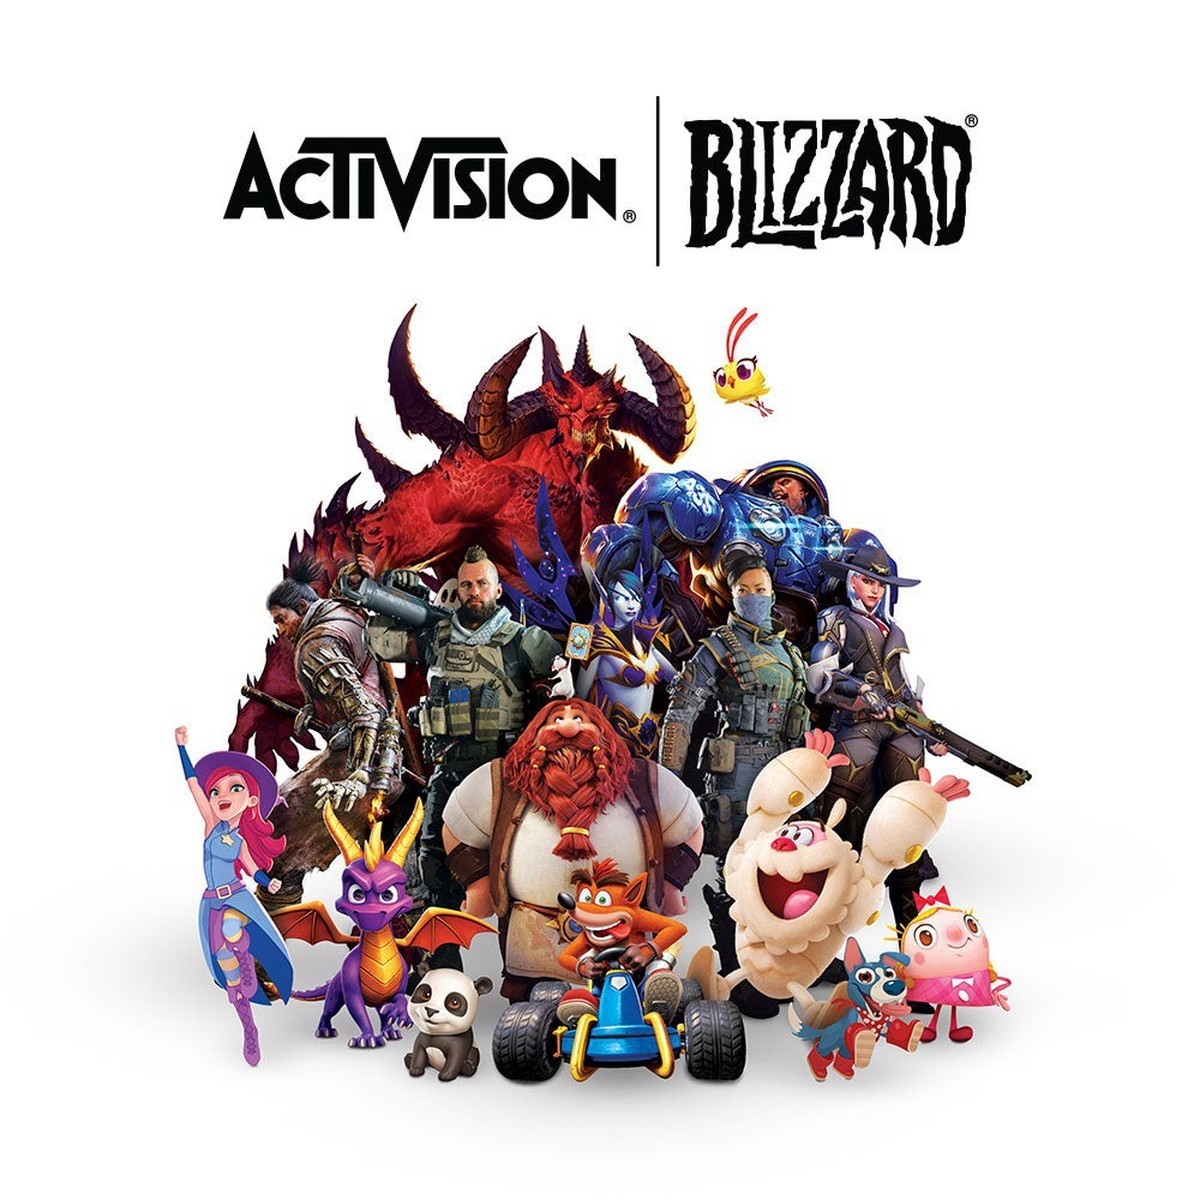 Activision Blizzard 因违反告发者保护法等遭罚 3500 万美元插图